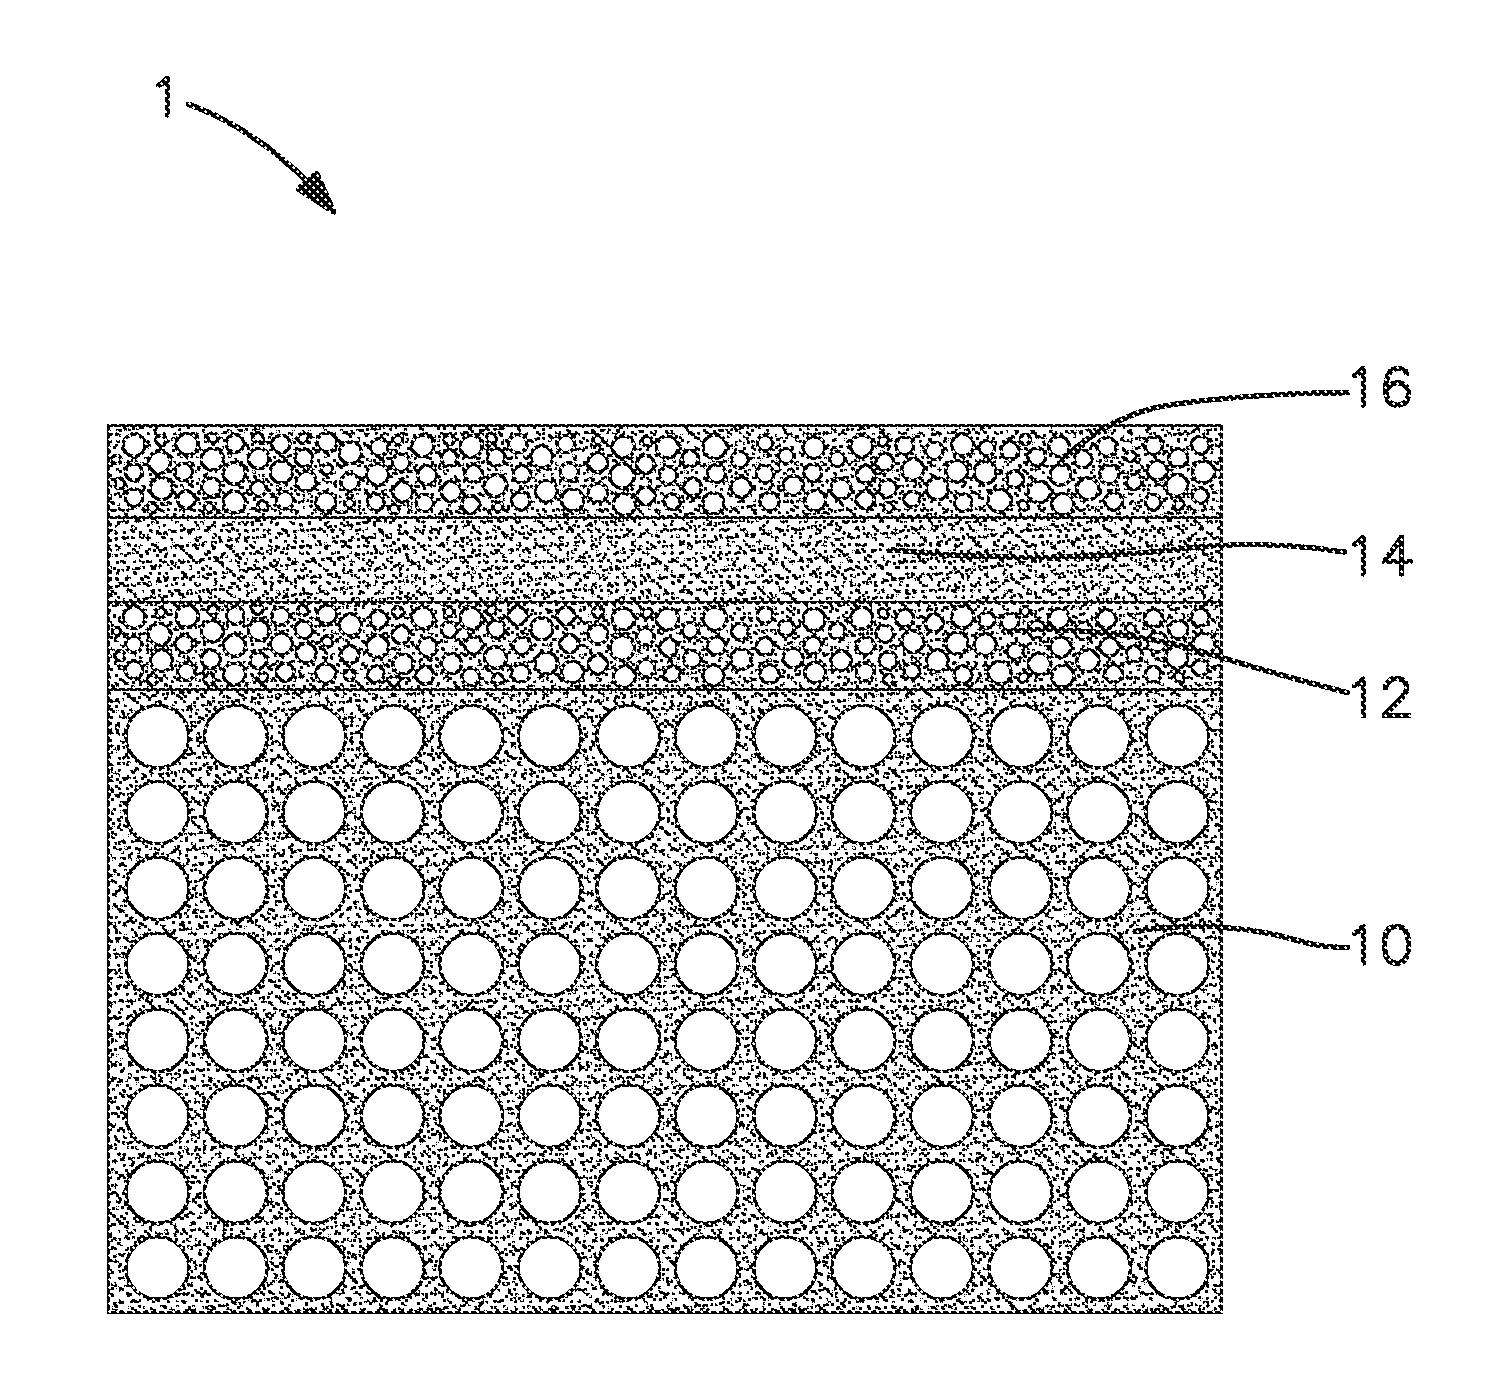 Composite oxygen transport membrane